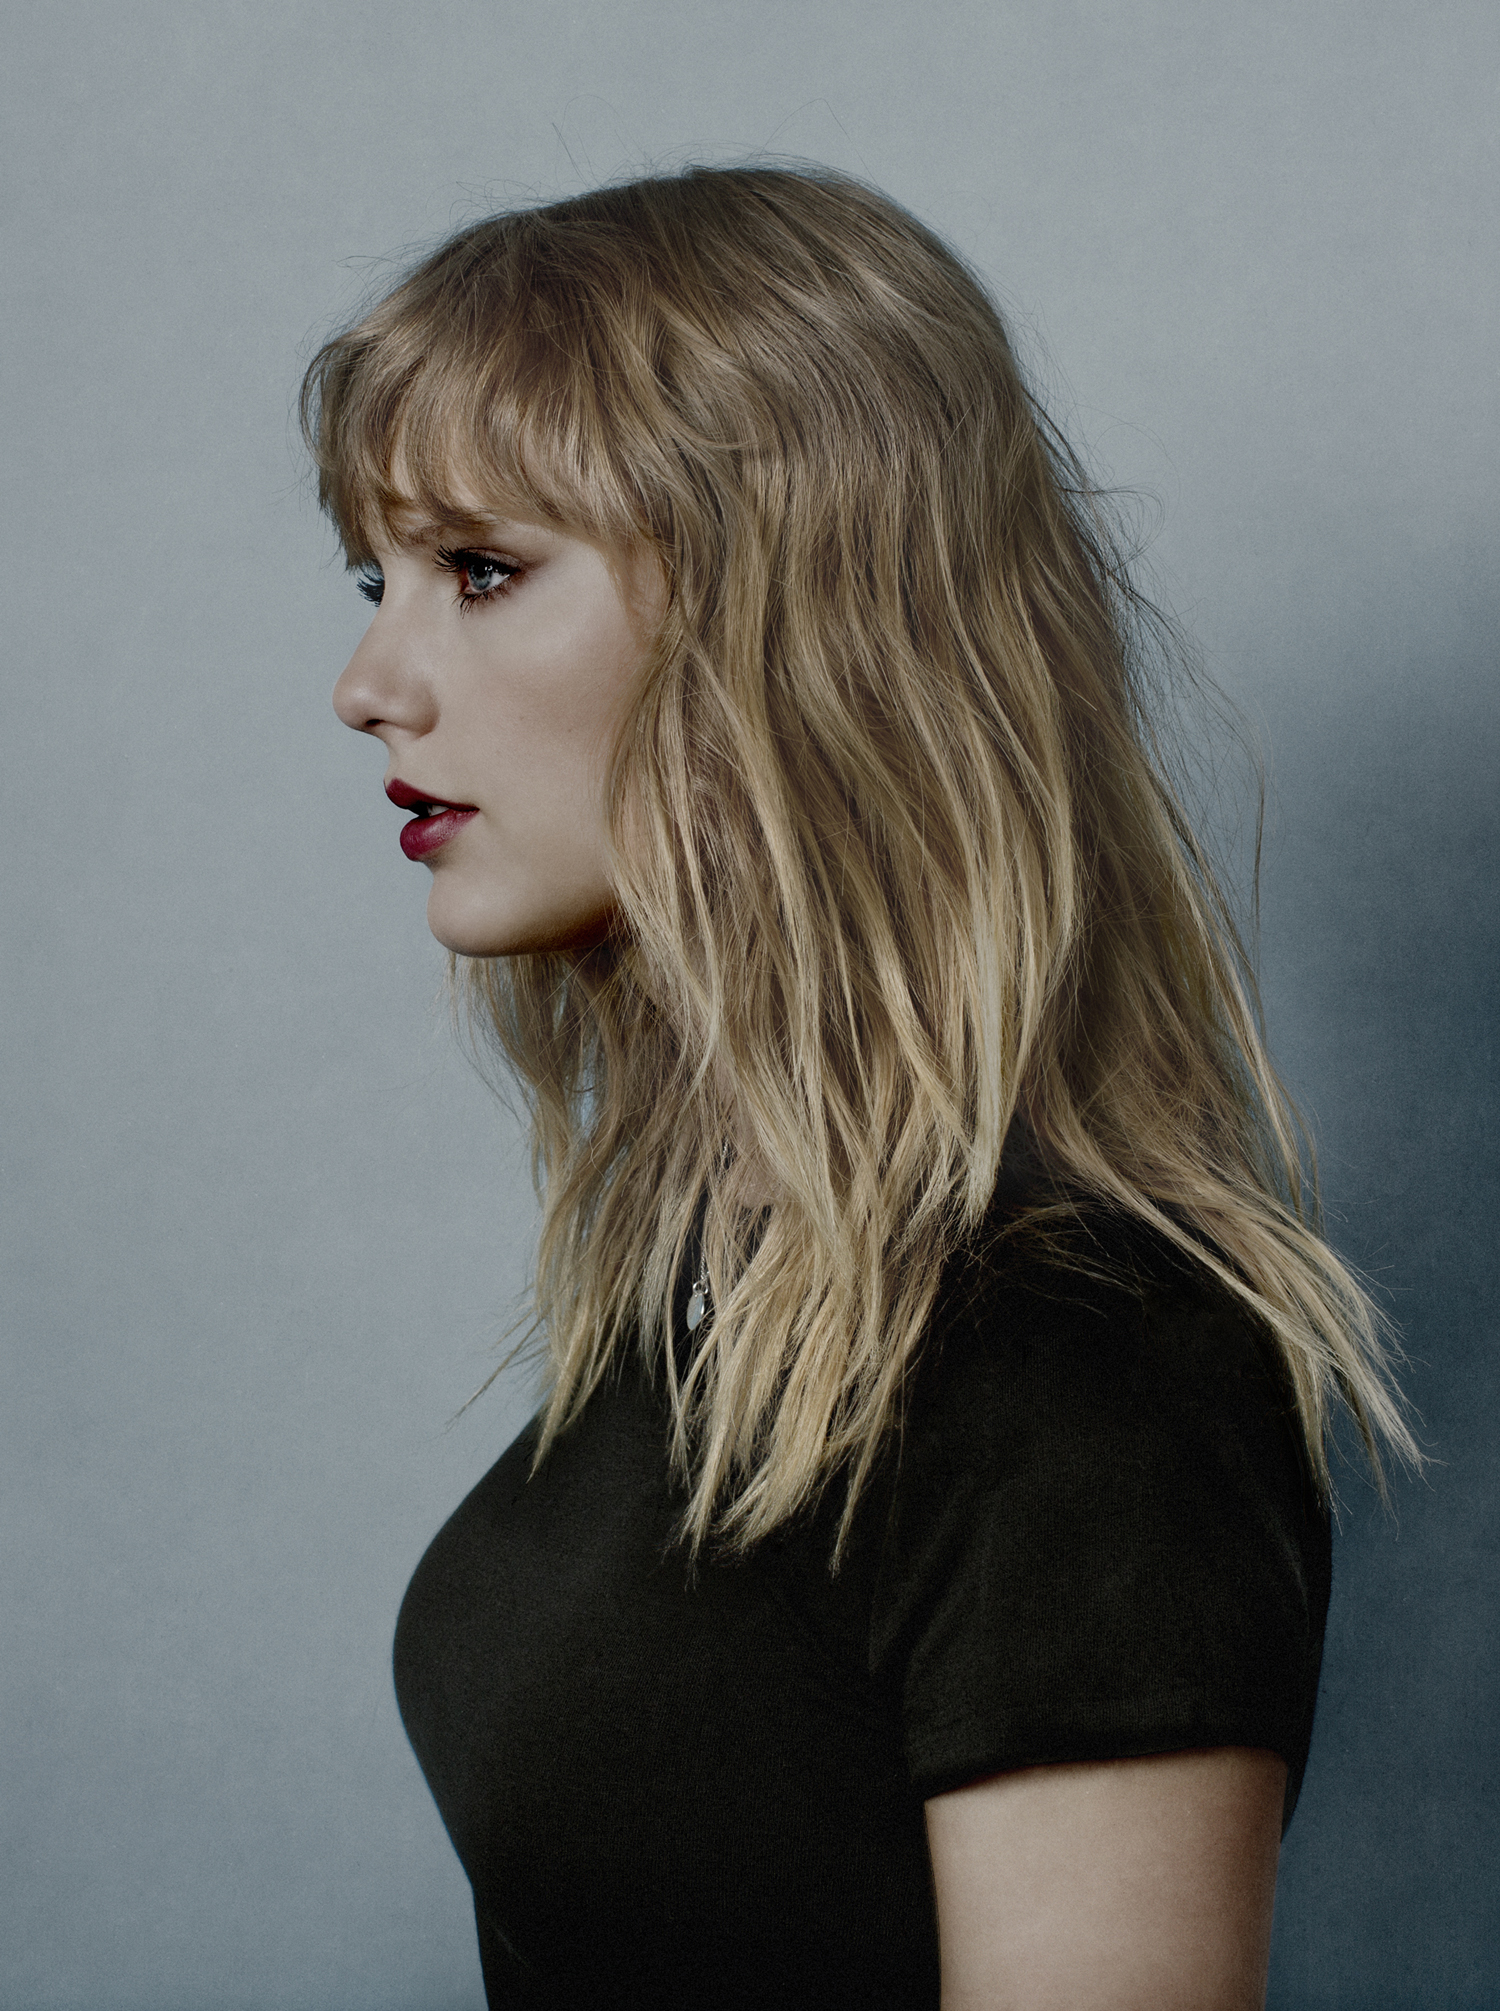 People 1500x2011 Taylor Swift women blonde singer blue eyes black top simple background profile lipstick